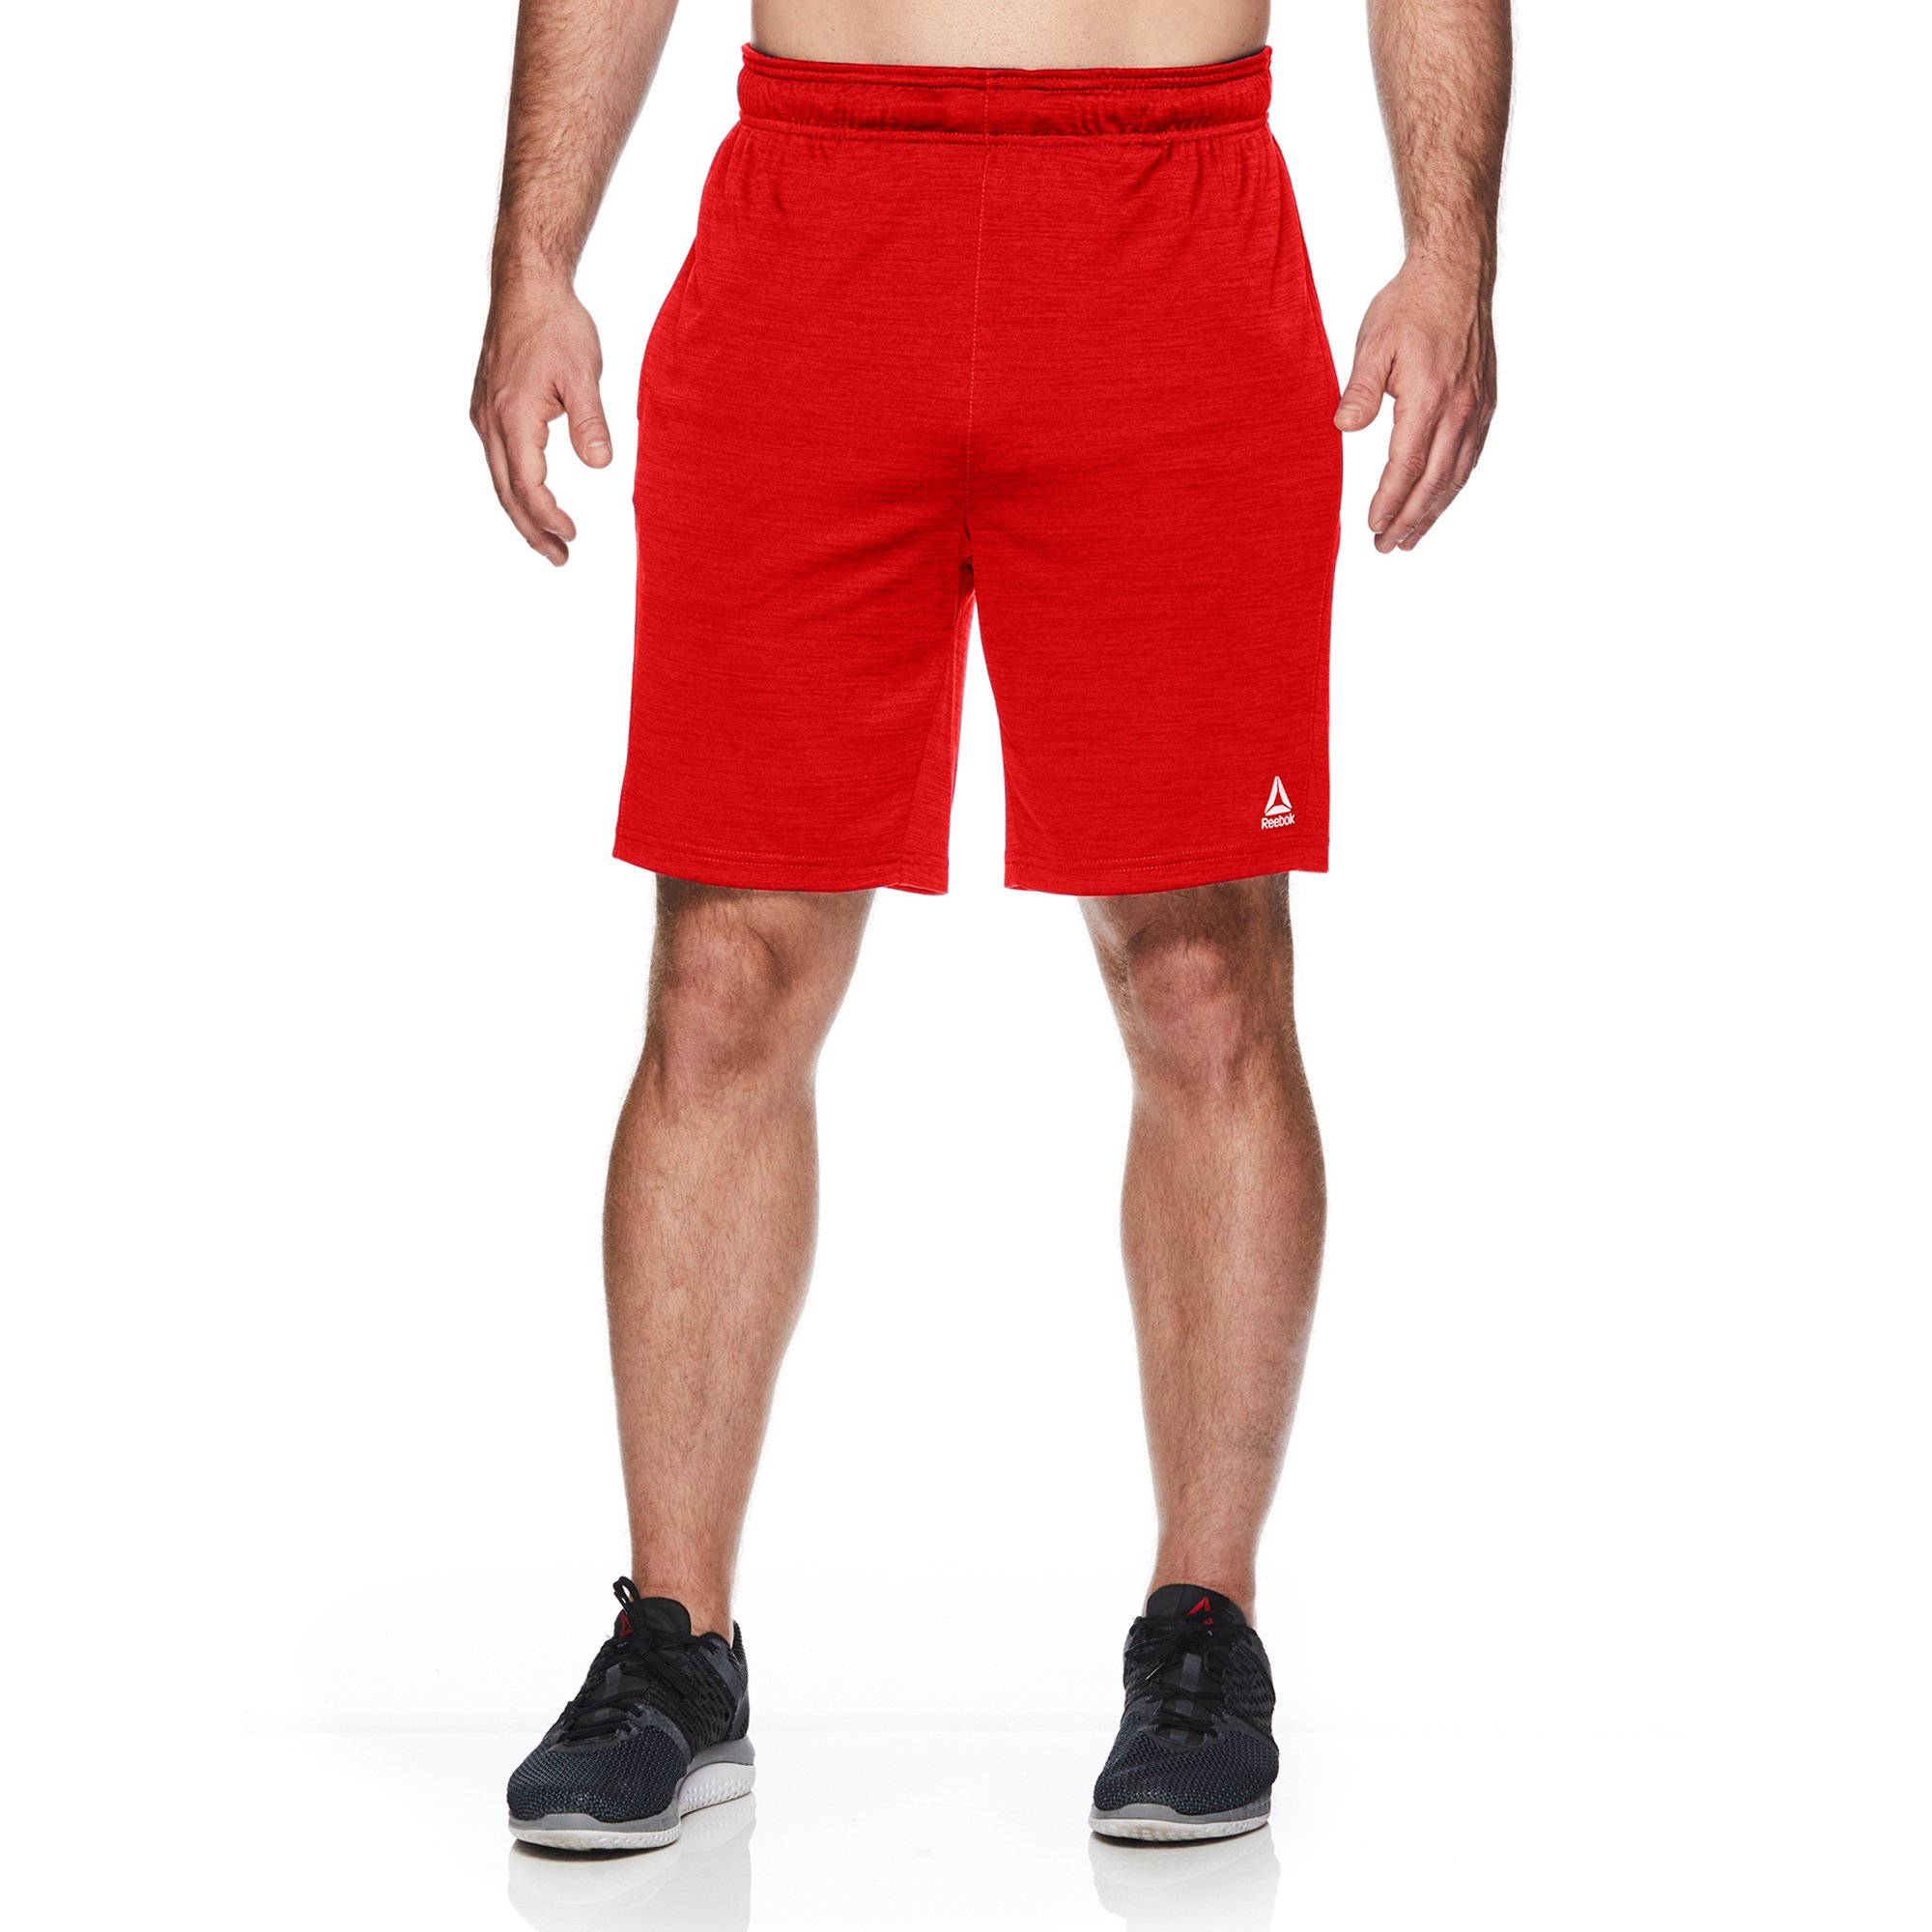 Quần thể thao training Reebok Men’s Fireball Shorts size M